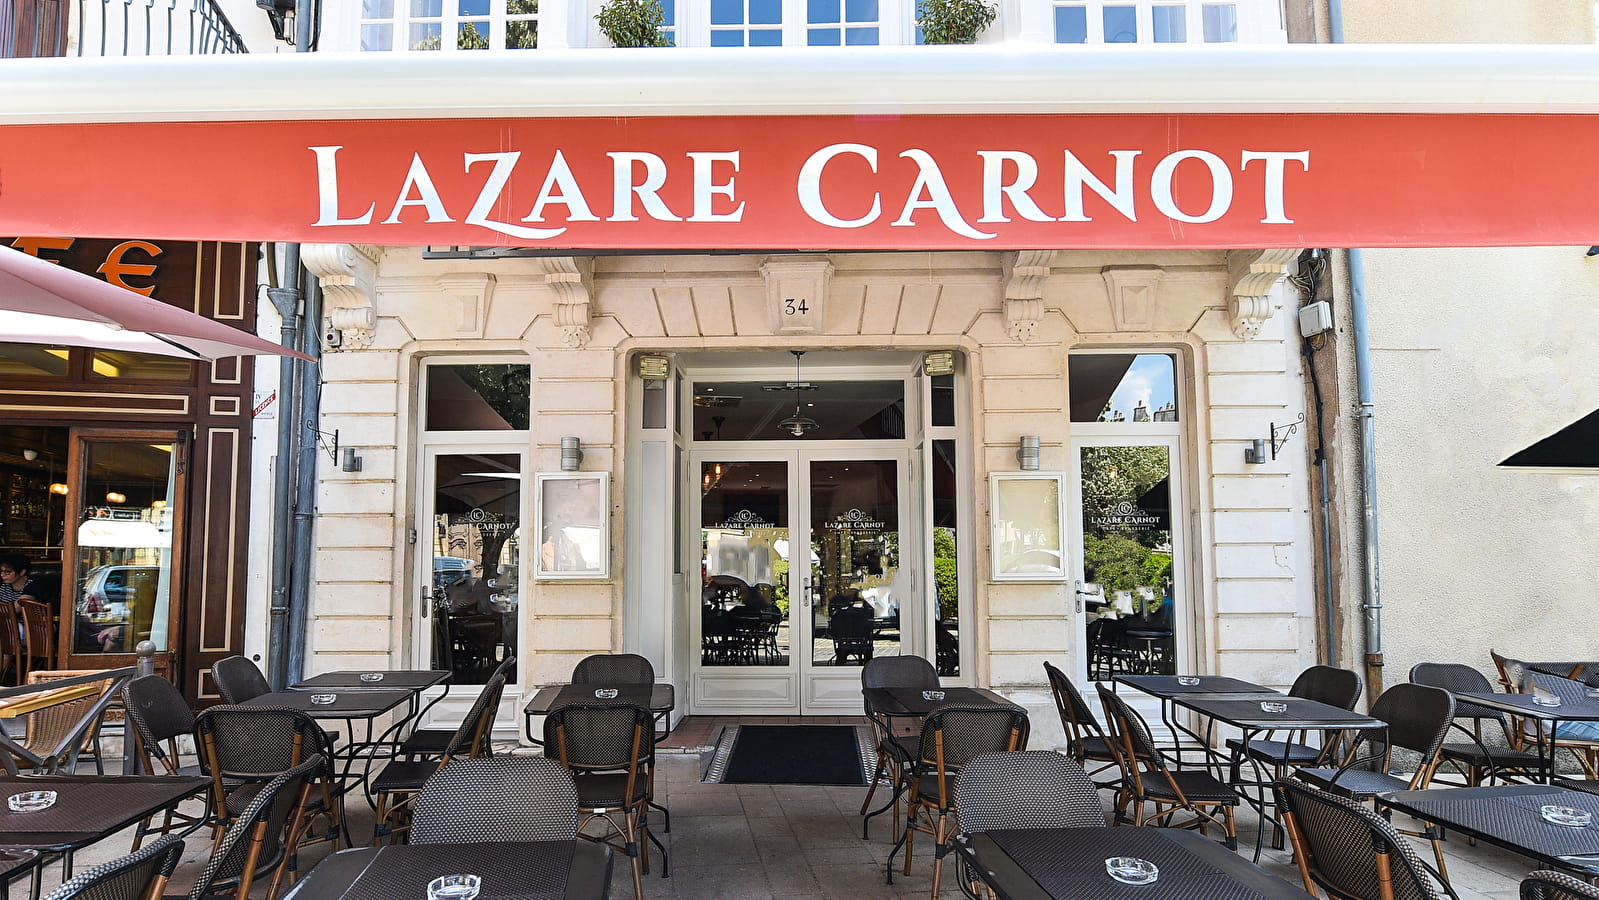 Brasserie Lazare Carnot